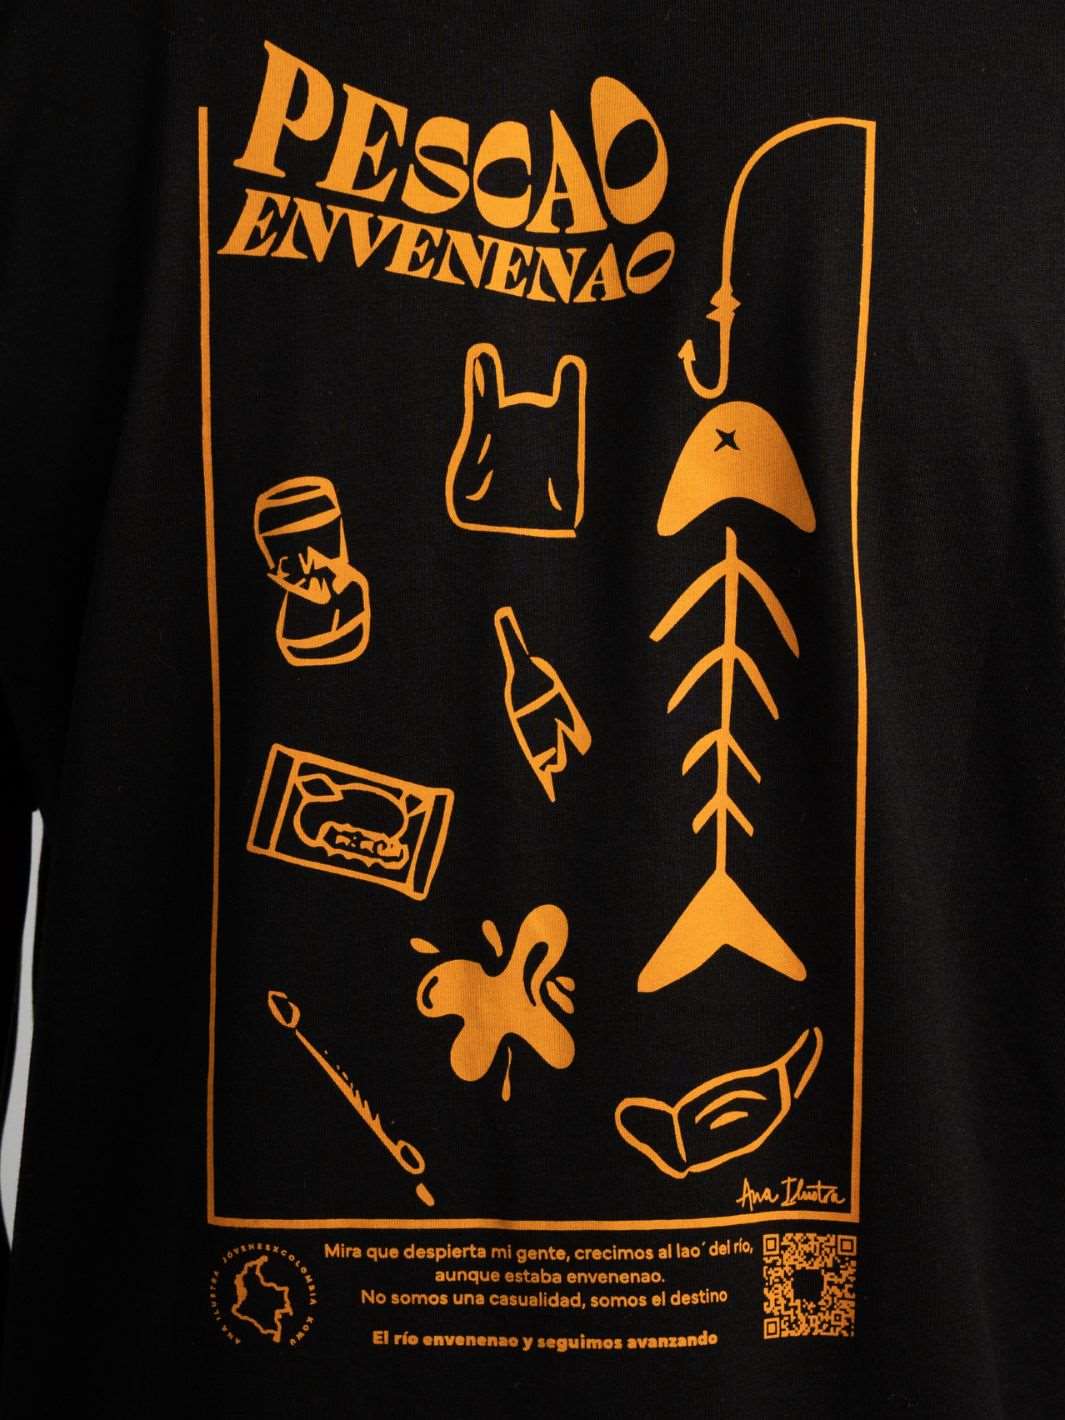 Camiseta Pescao Envenenao Negra